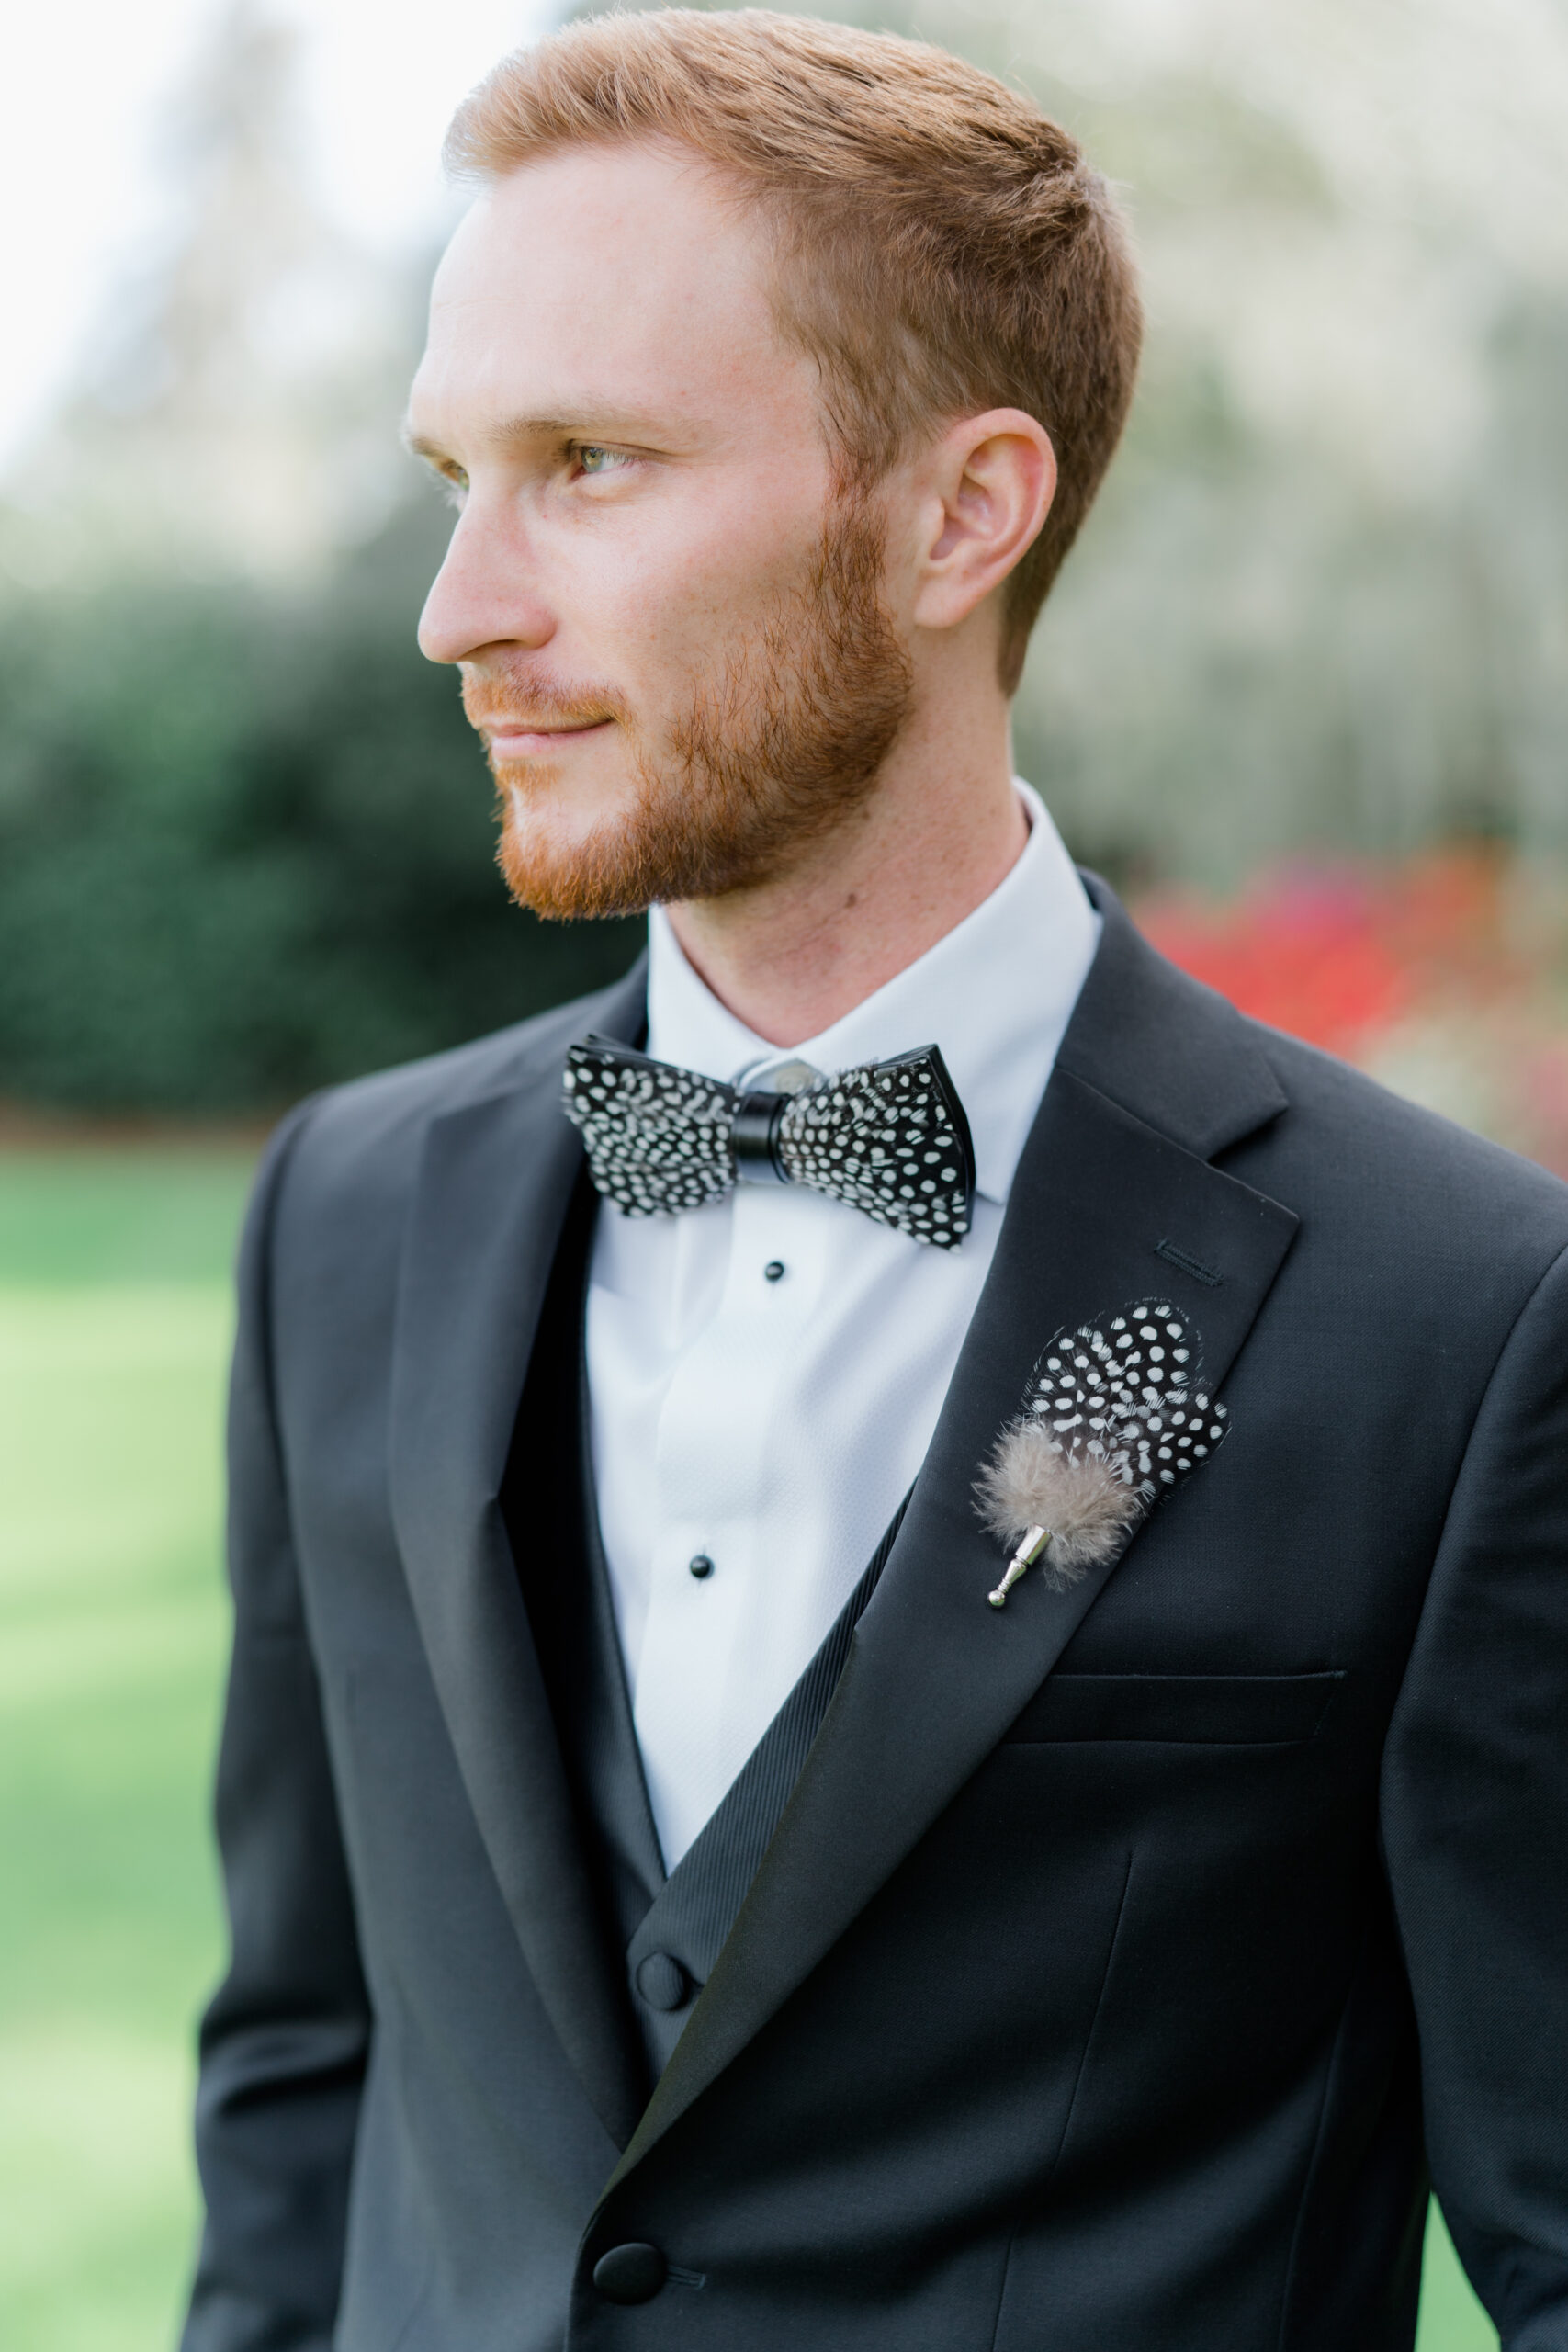 Brackish bowtie and lapel pin. Red-head groom in black tuxedo. 